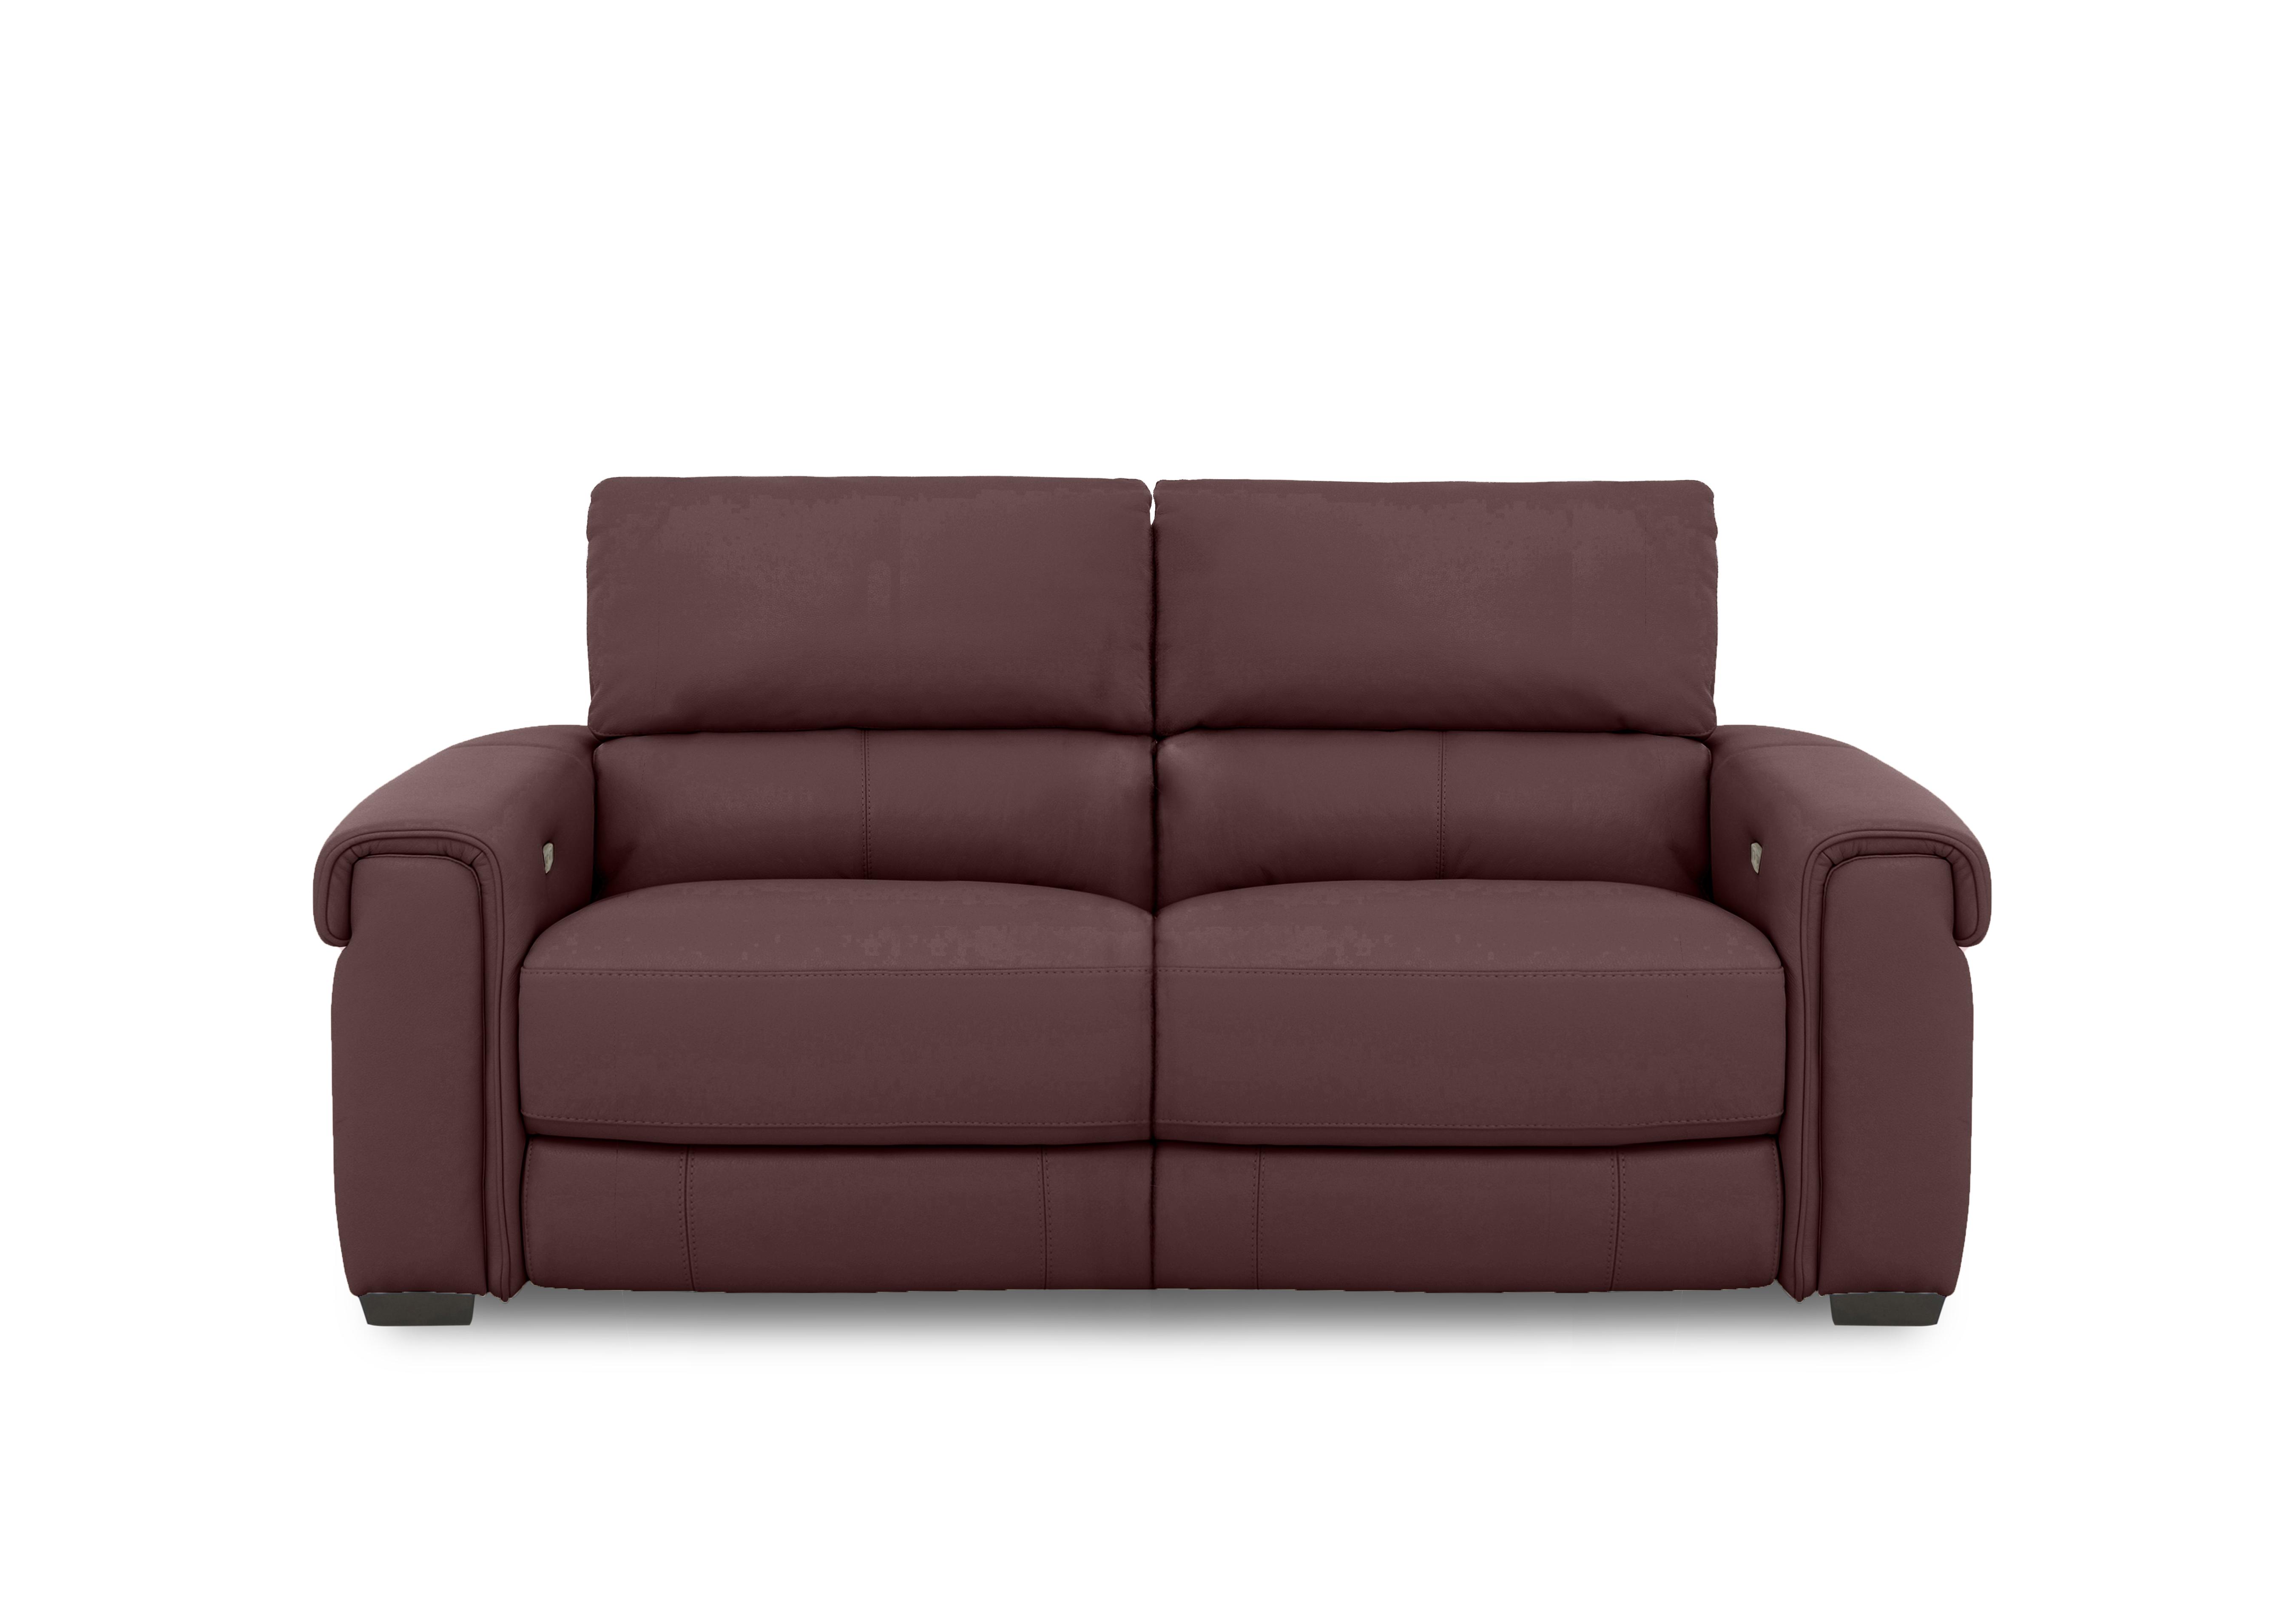 Nixon Leather 3 Seater Sofa in An-751b Burgundy on Furniture Village